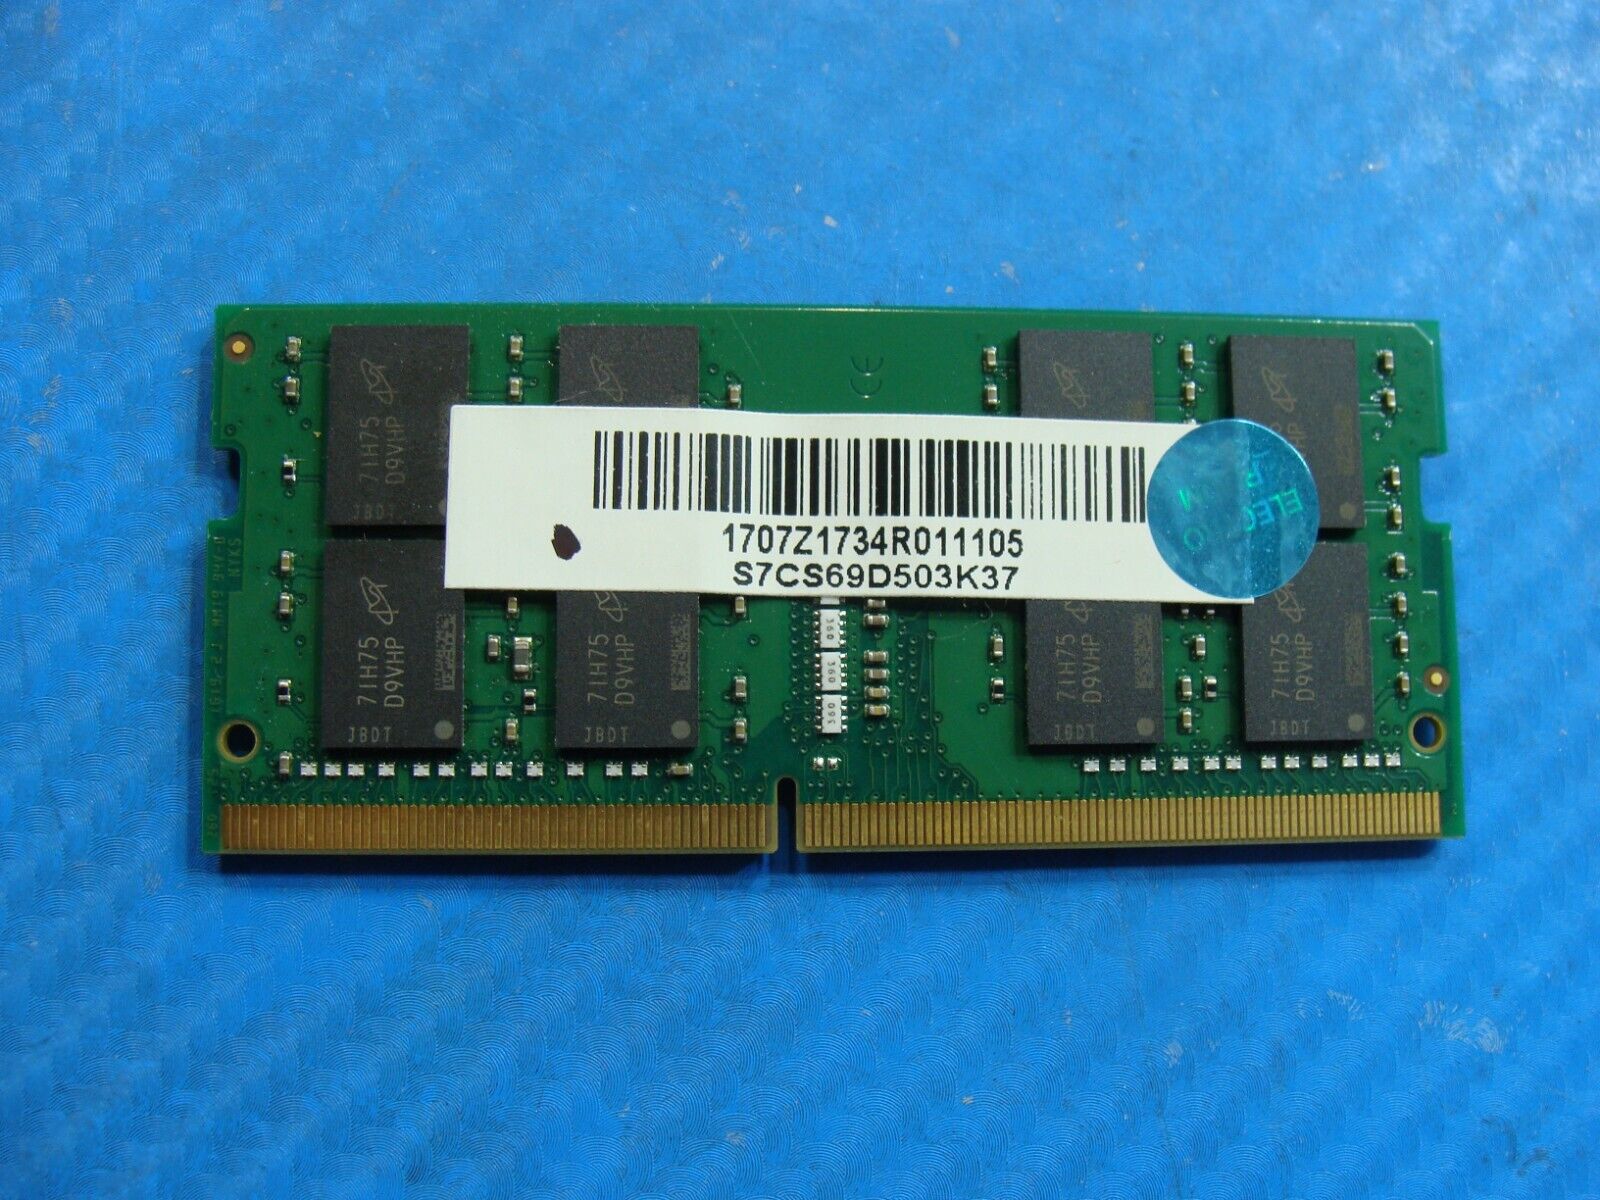 MSI GE72MVR 7RG Kingston 8GB Memory RAM SO-DIMM 9995630-E14.A01G MSI24D4S7D8MH